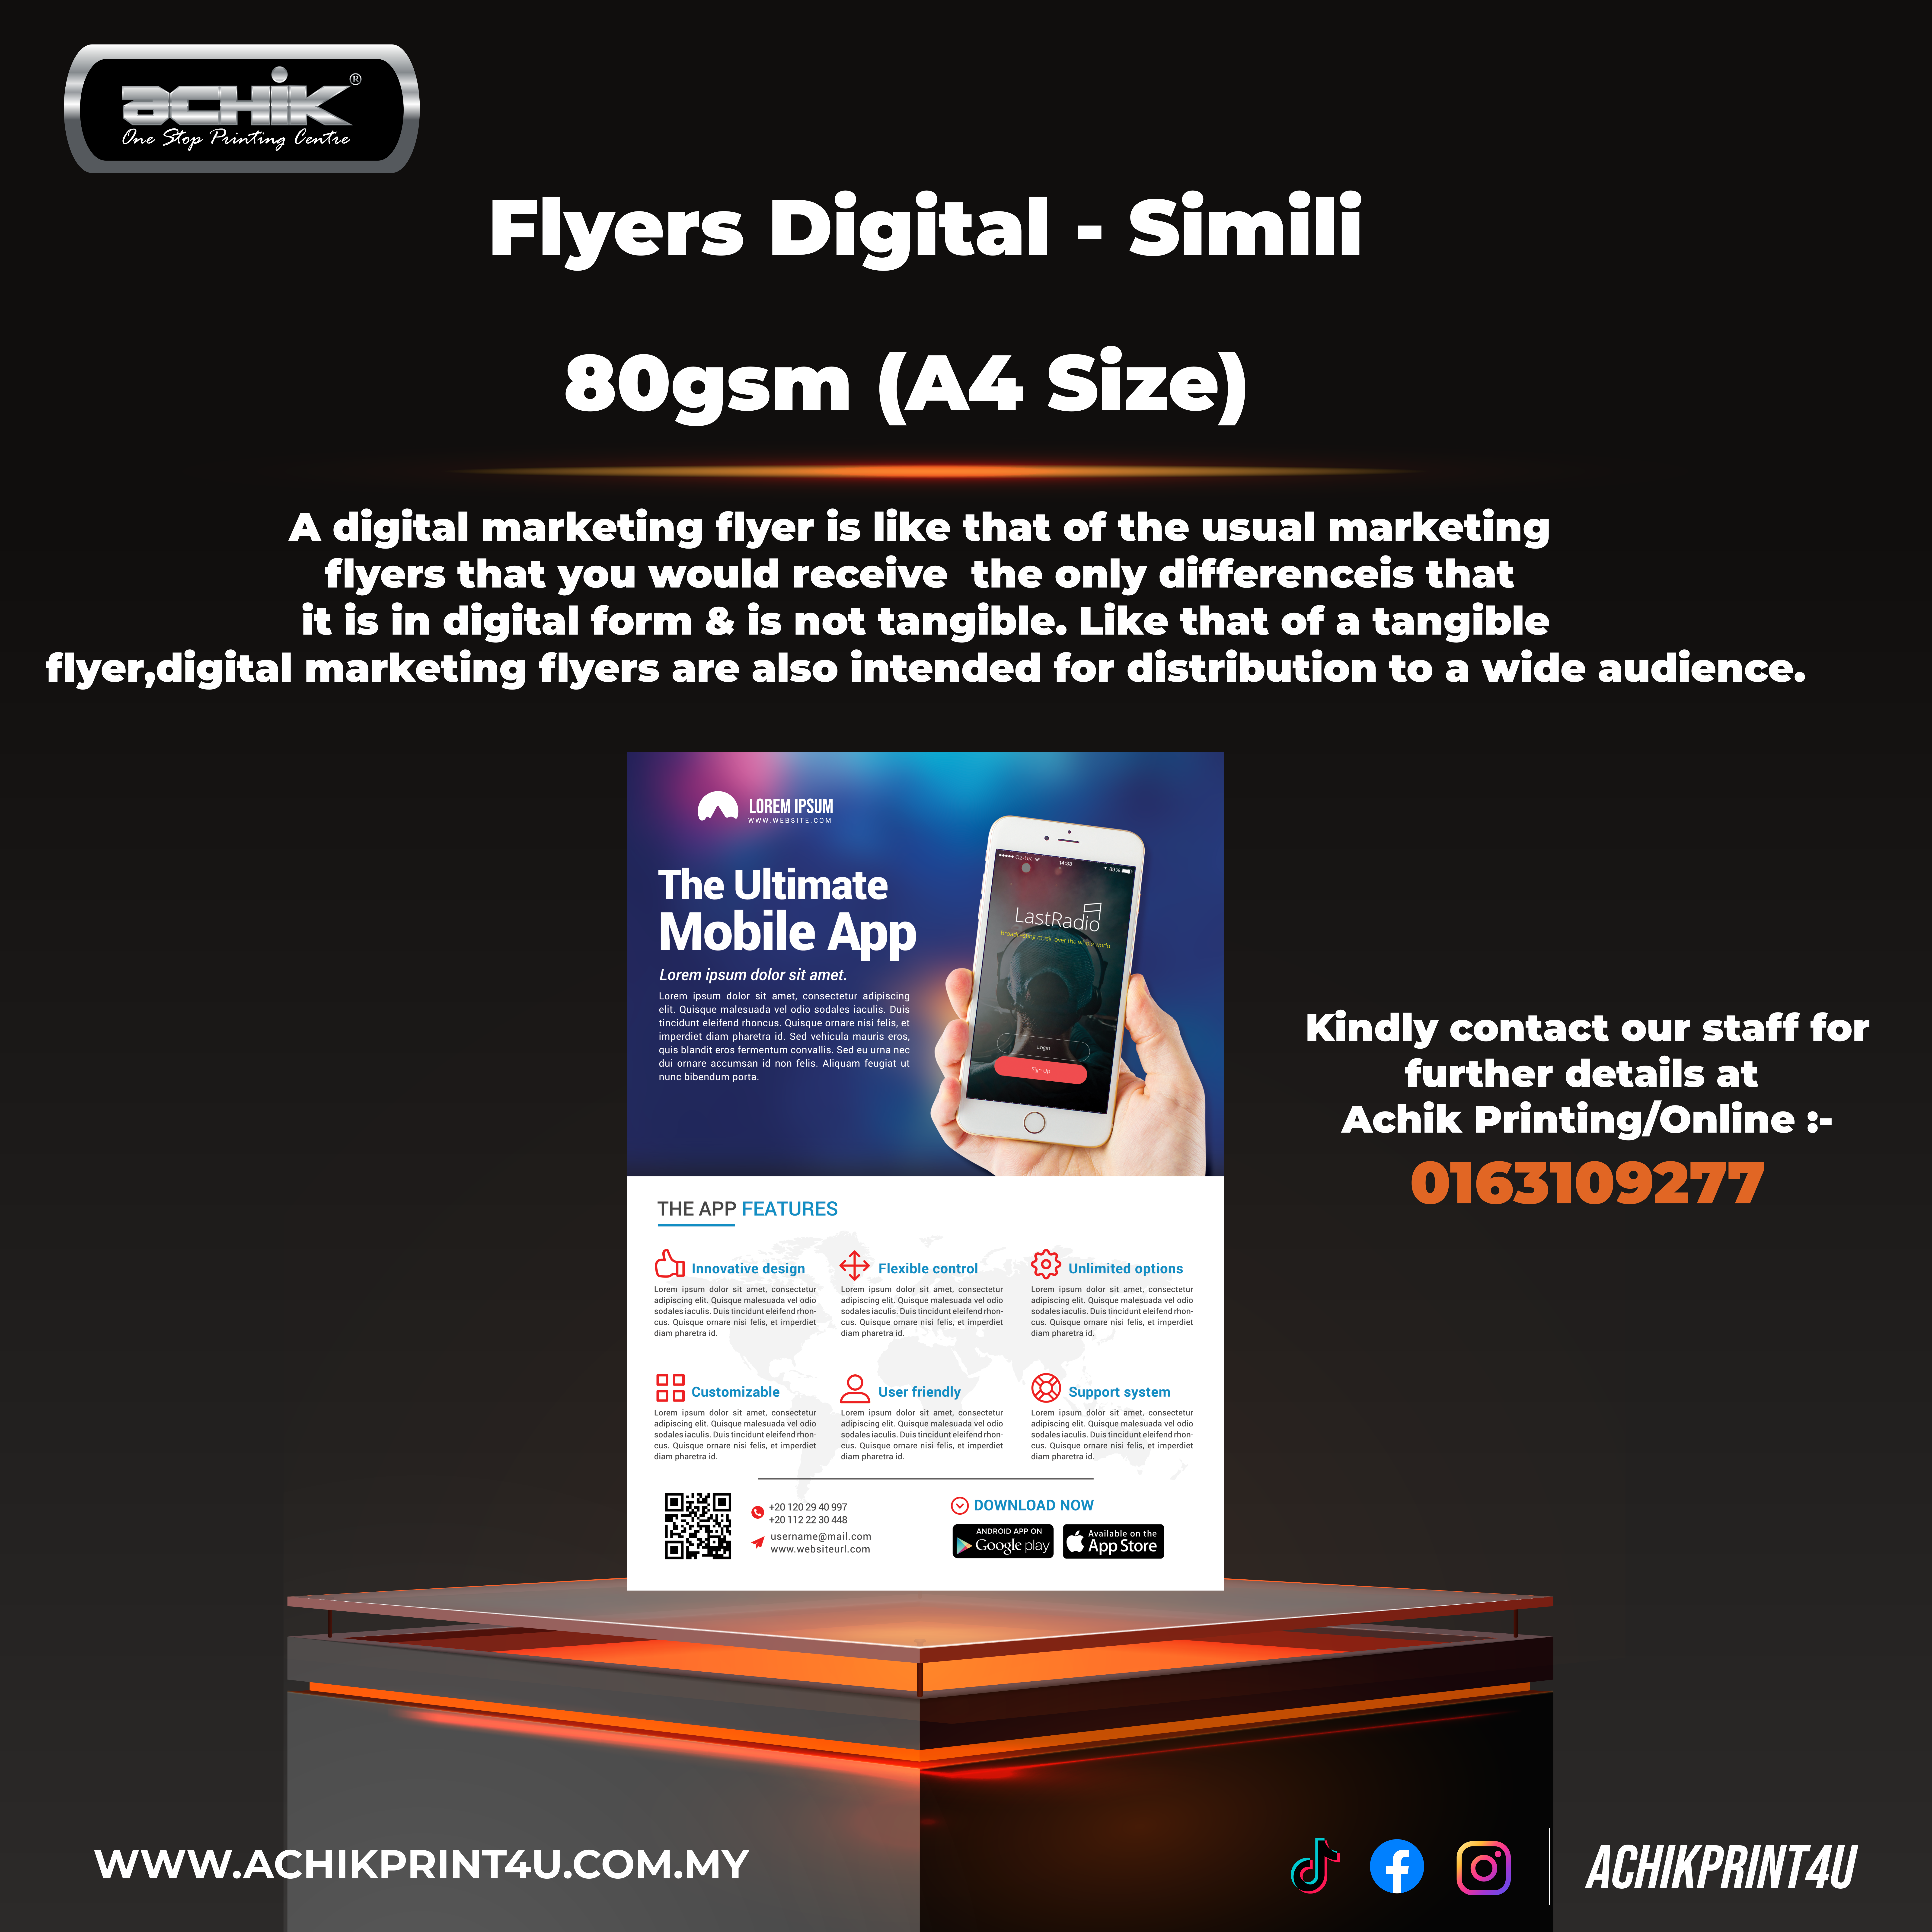 Flyers Digital - Simili 80gsm (A4 Size)